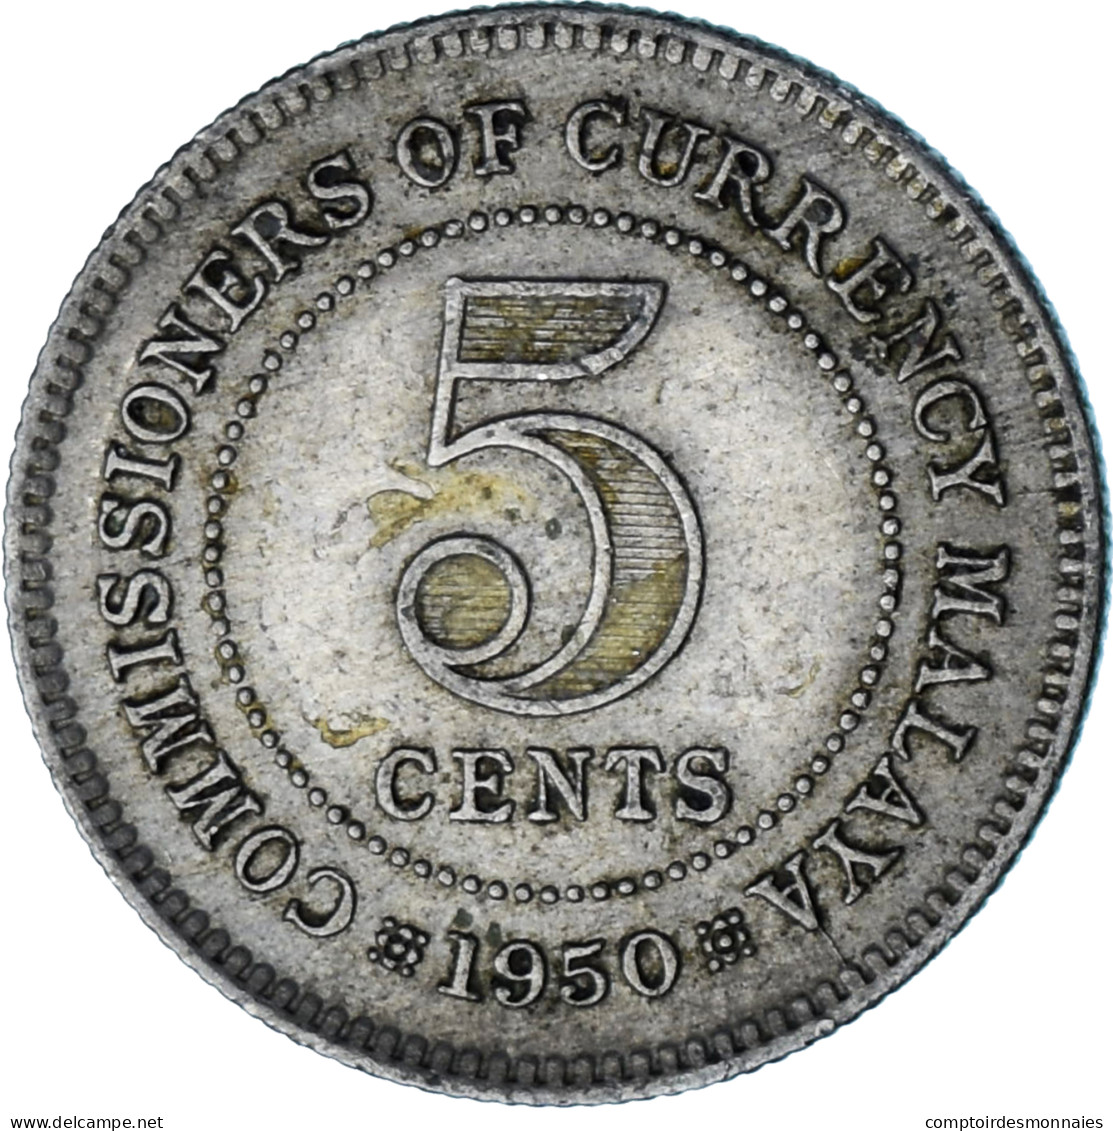 Malaisie, 5 Cents, 1950 - Malesia